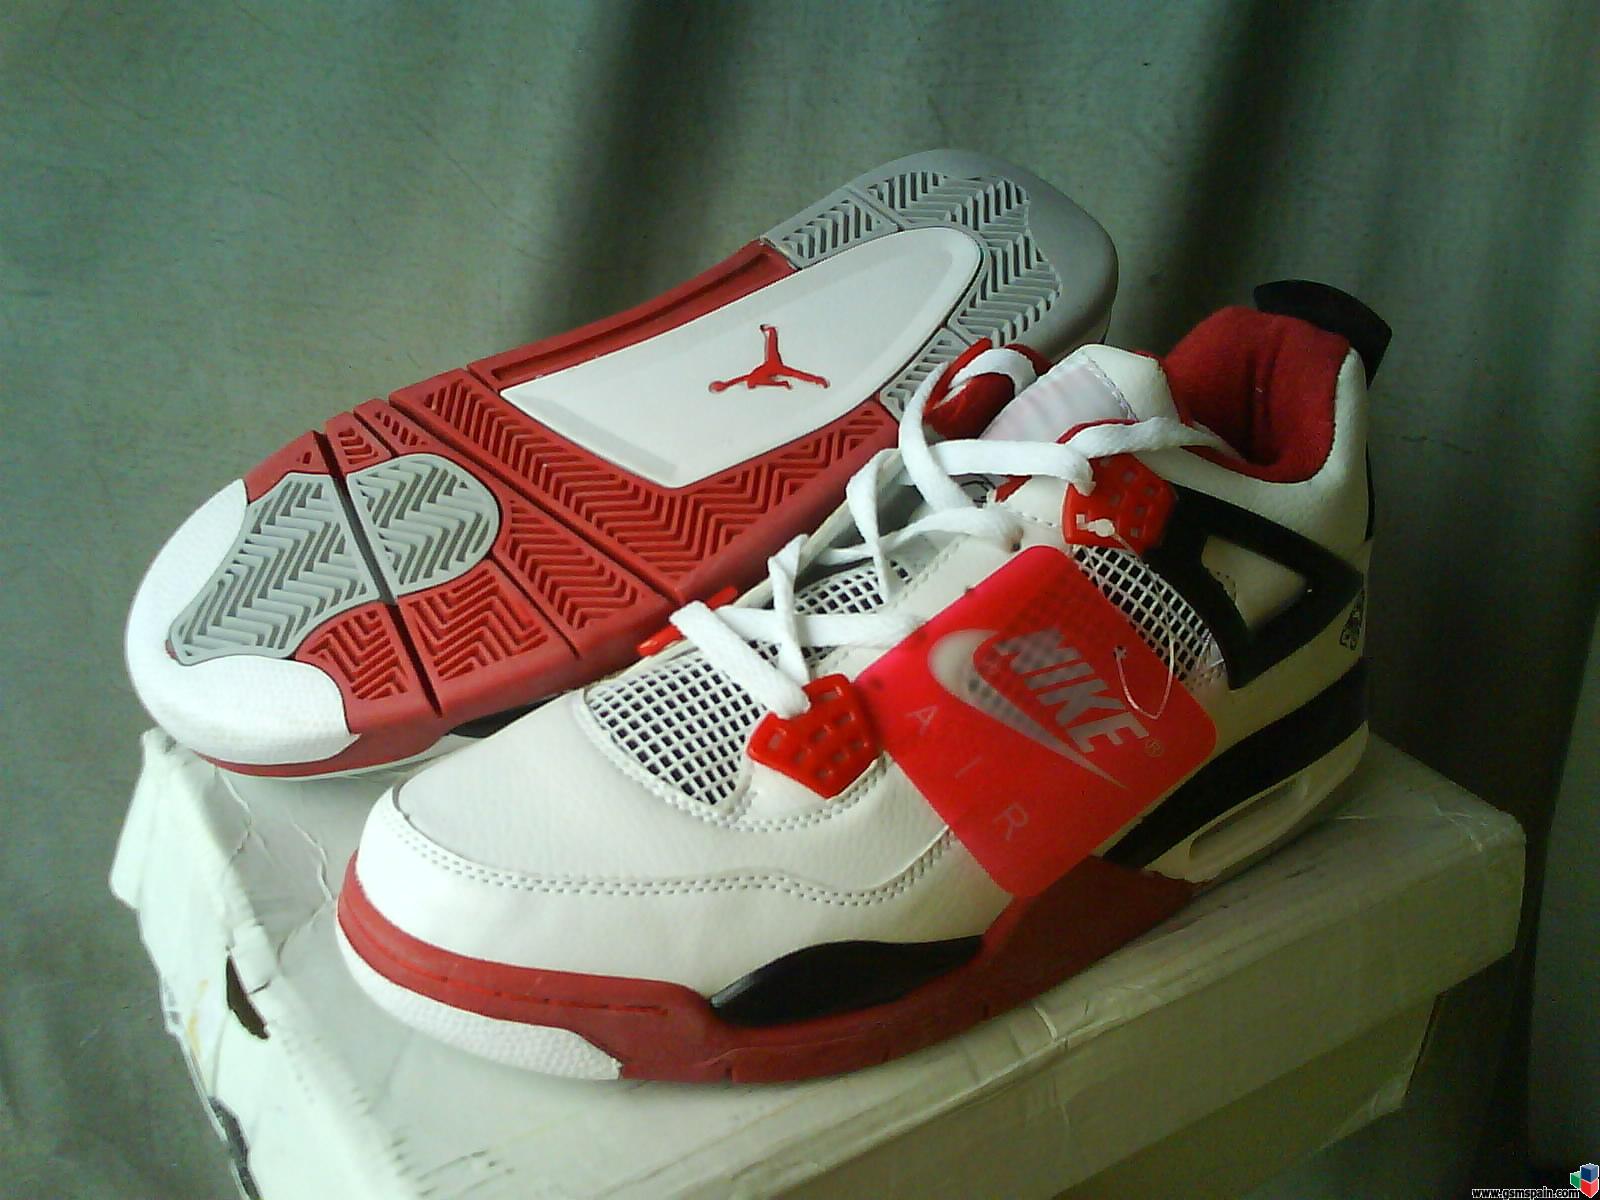 [Vendo] Zapatillas Nike. Air Jordan, Max TN, Shox, 360, 95... Ms de 400 modelos!